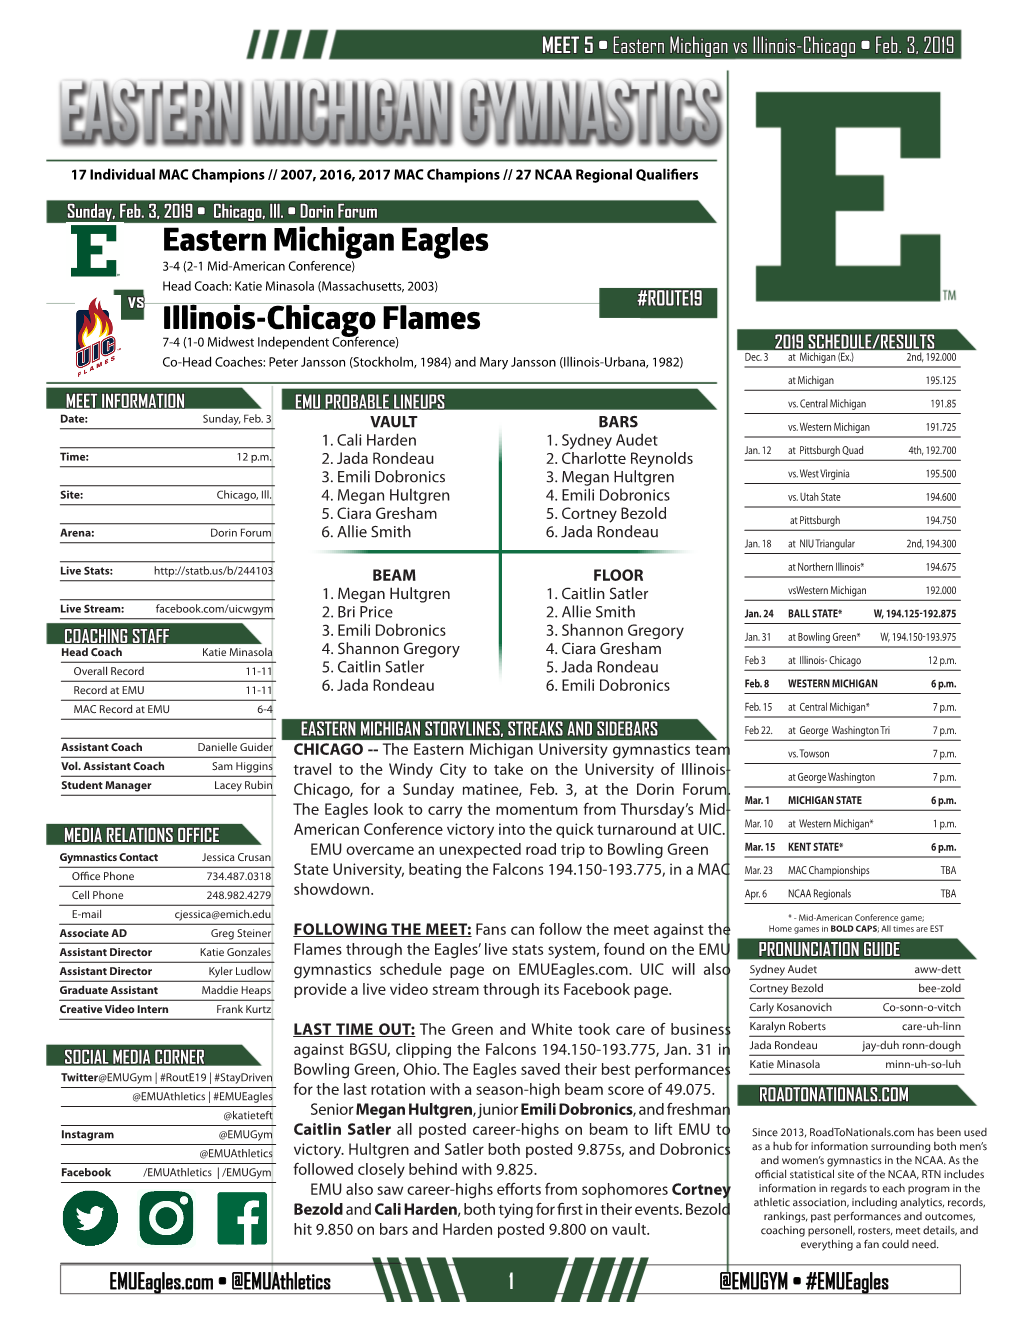 Eastern Michigan Eagles Illinois-Chicago Flames